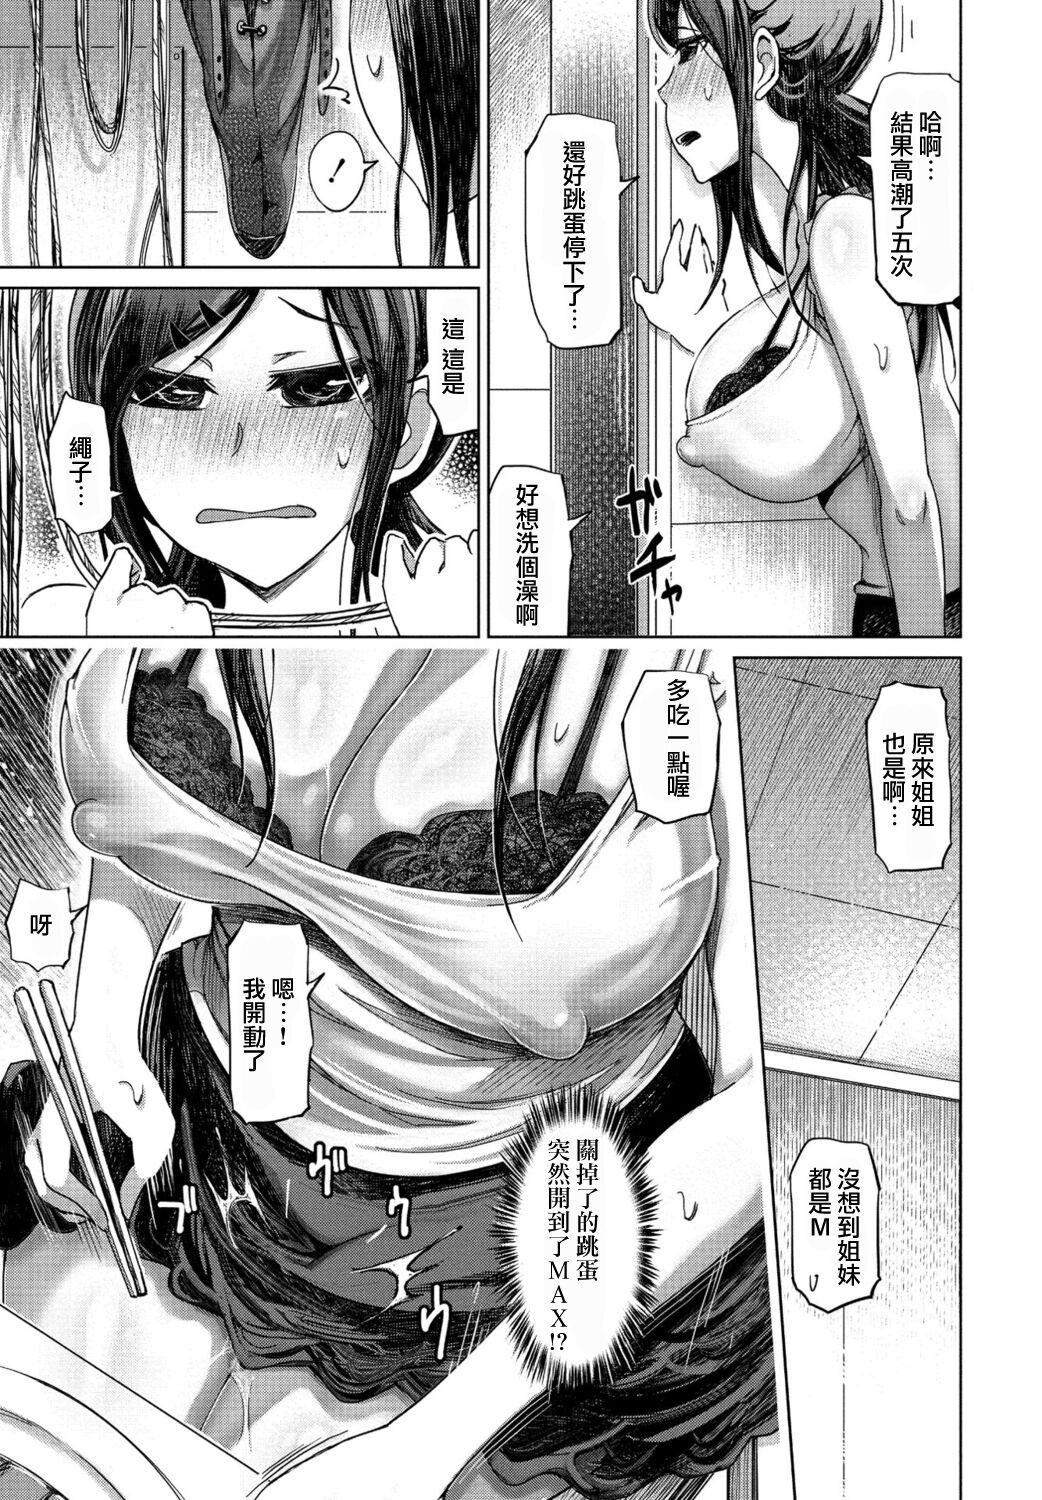 Gaybukkake Do-M Shimai no Kaikan Wana Wana Panic Porn Star - Page 7